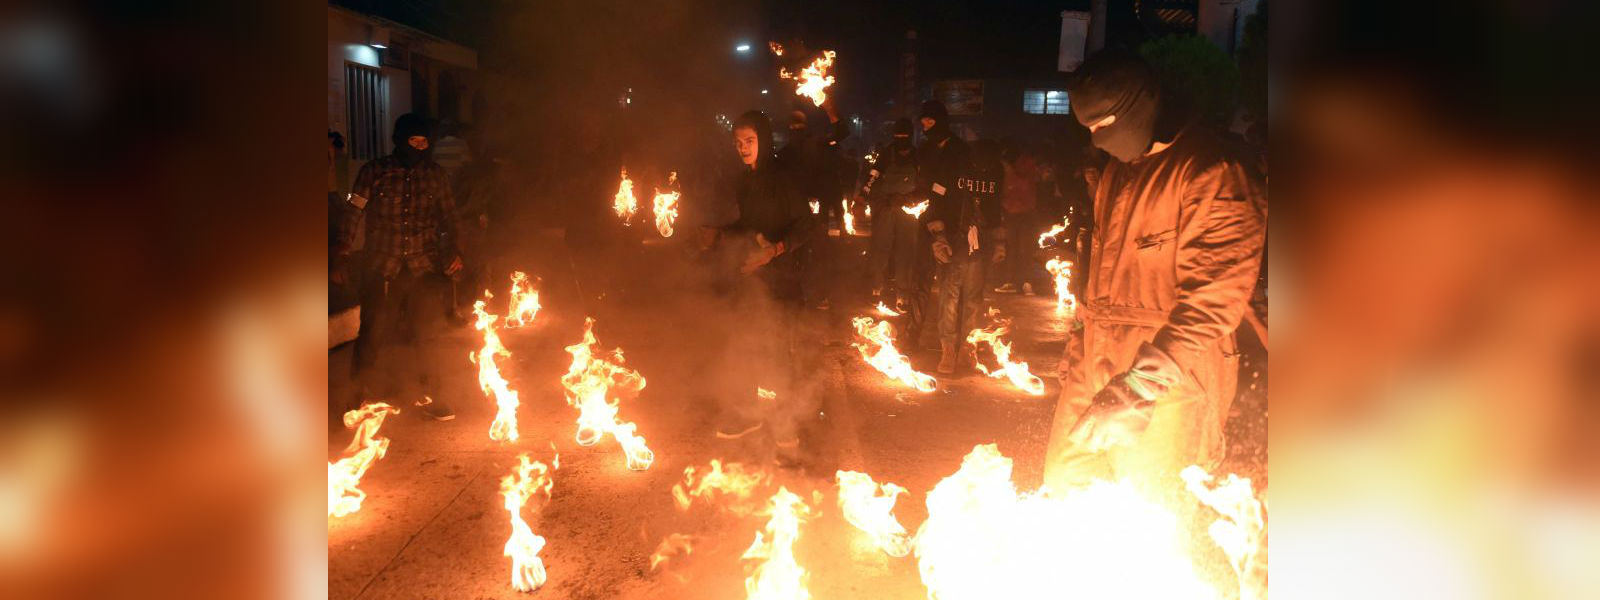 Salvadorans fling flaming fireballs at each other